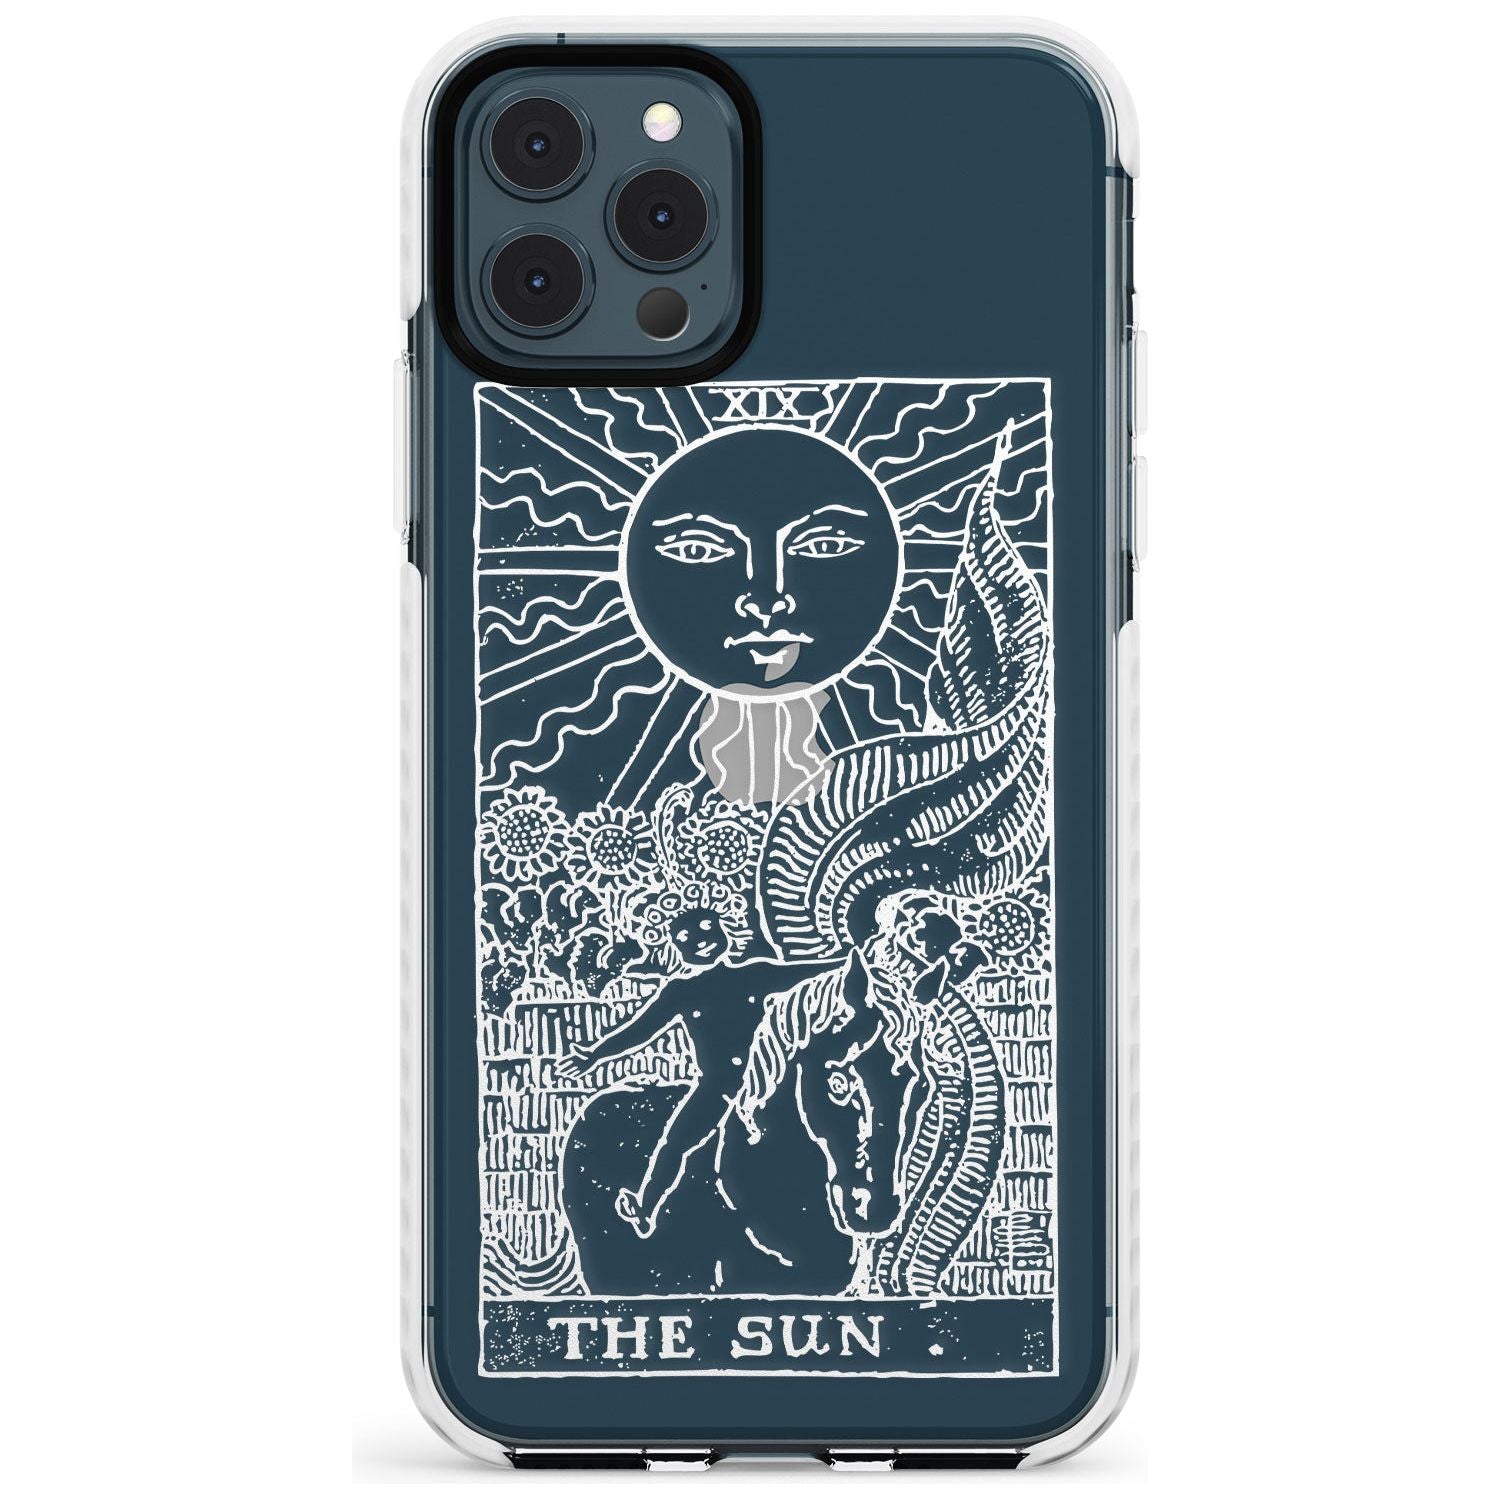 The Sun Tarot Card - White Transparent Slim TPU Phone Case for iPhone 11 Pro Max